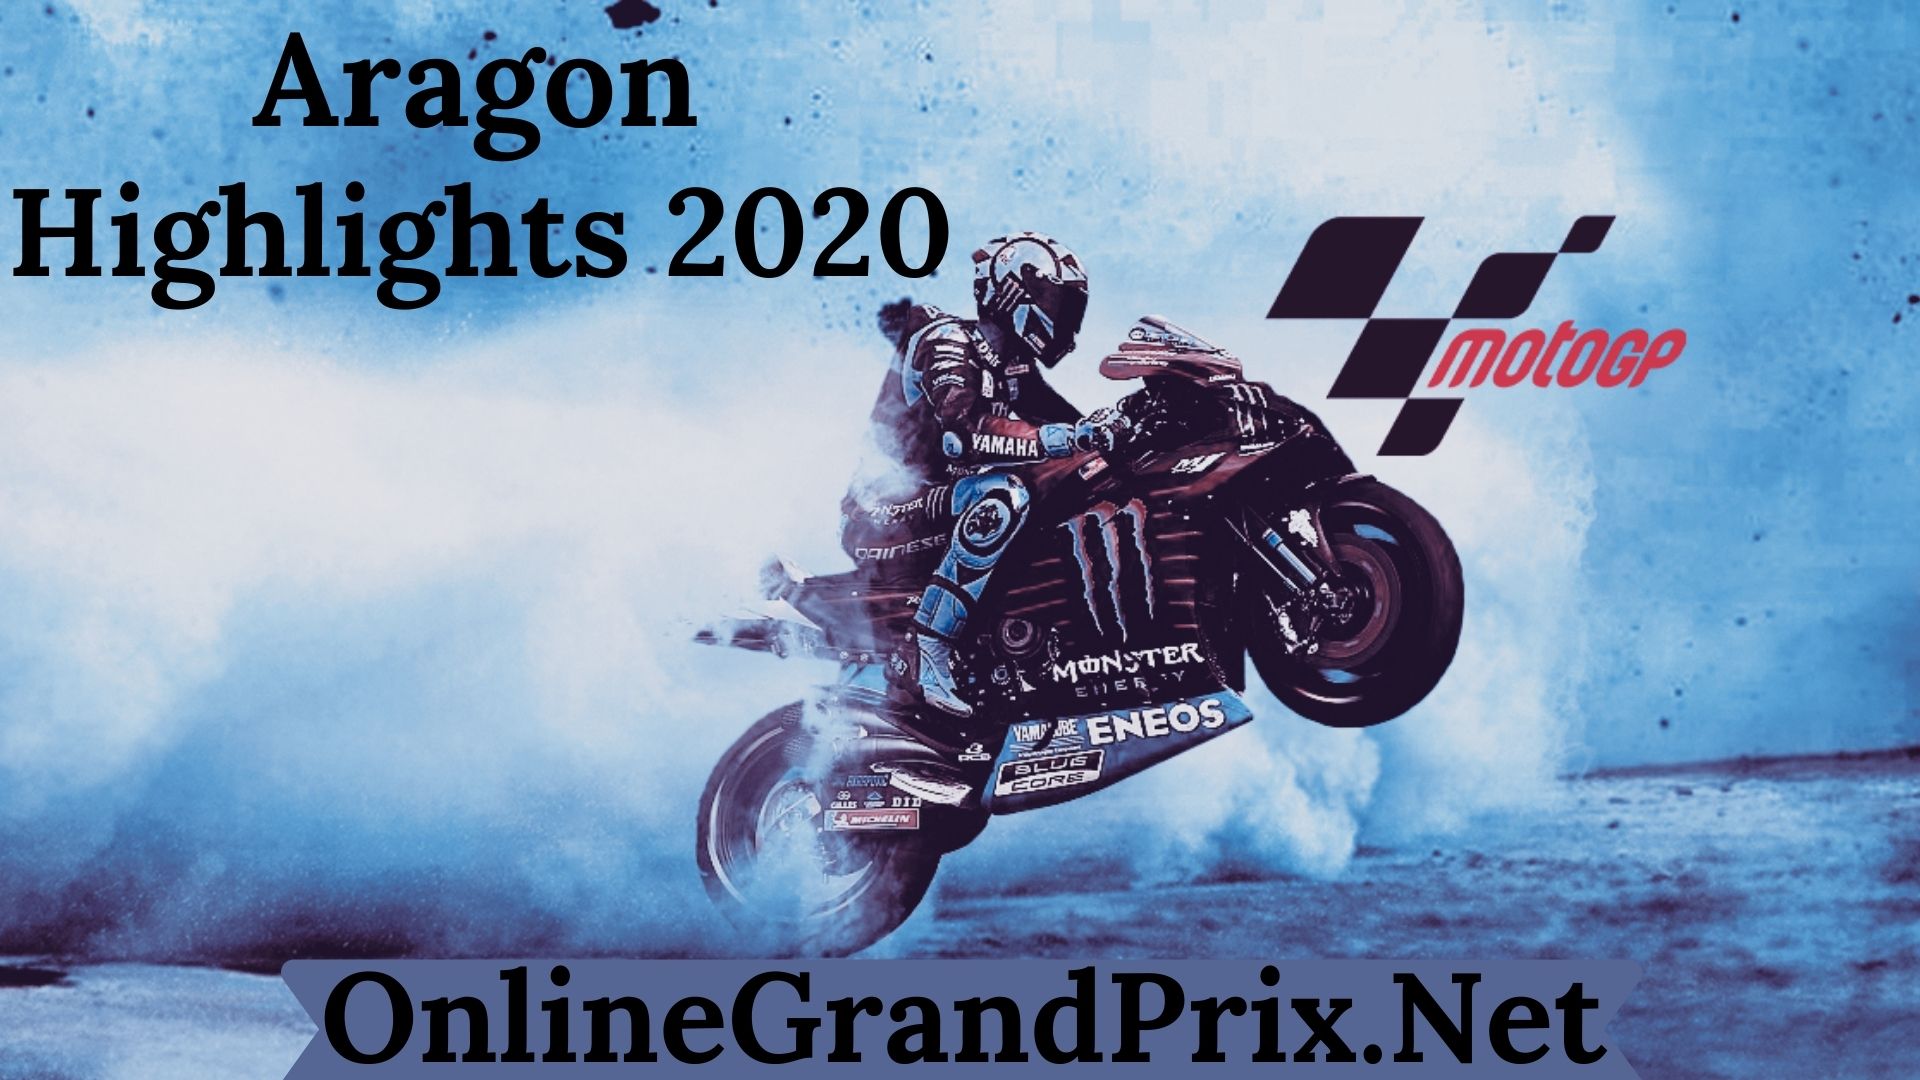 Aragon MotoGP Highlights 2020